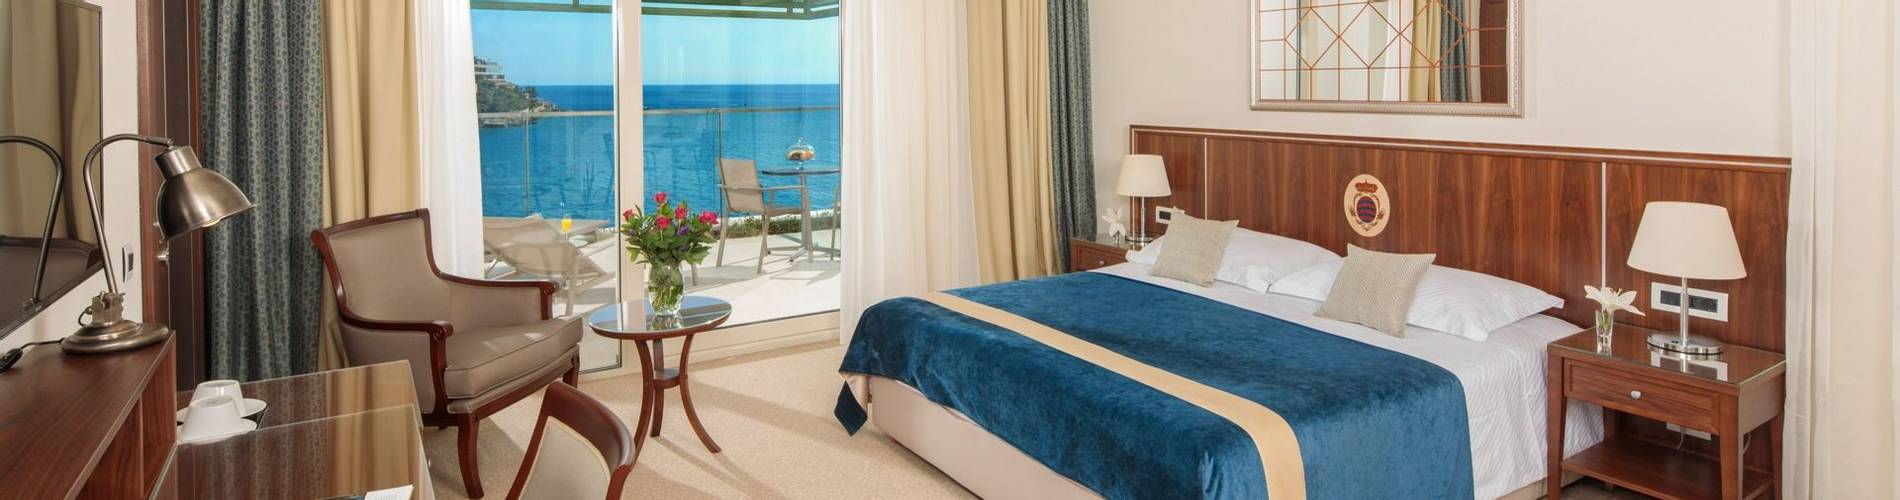 Hotel More, Dubrovnik, Croatia, Double SV.jpg